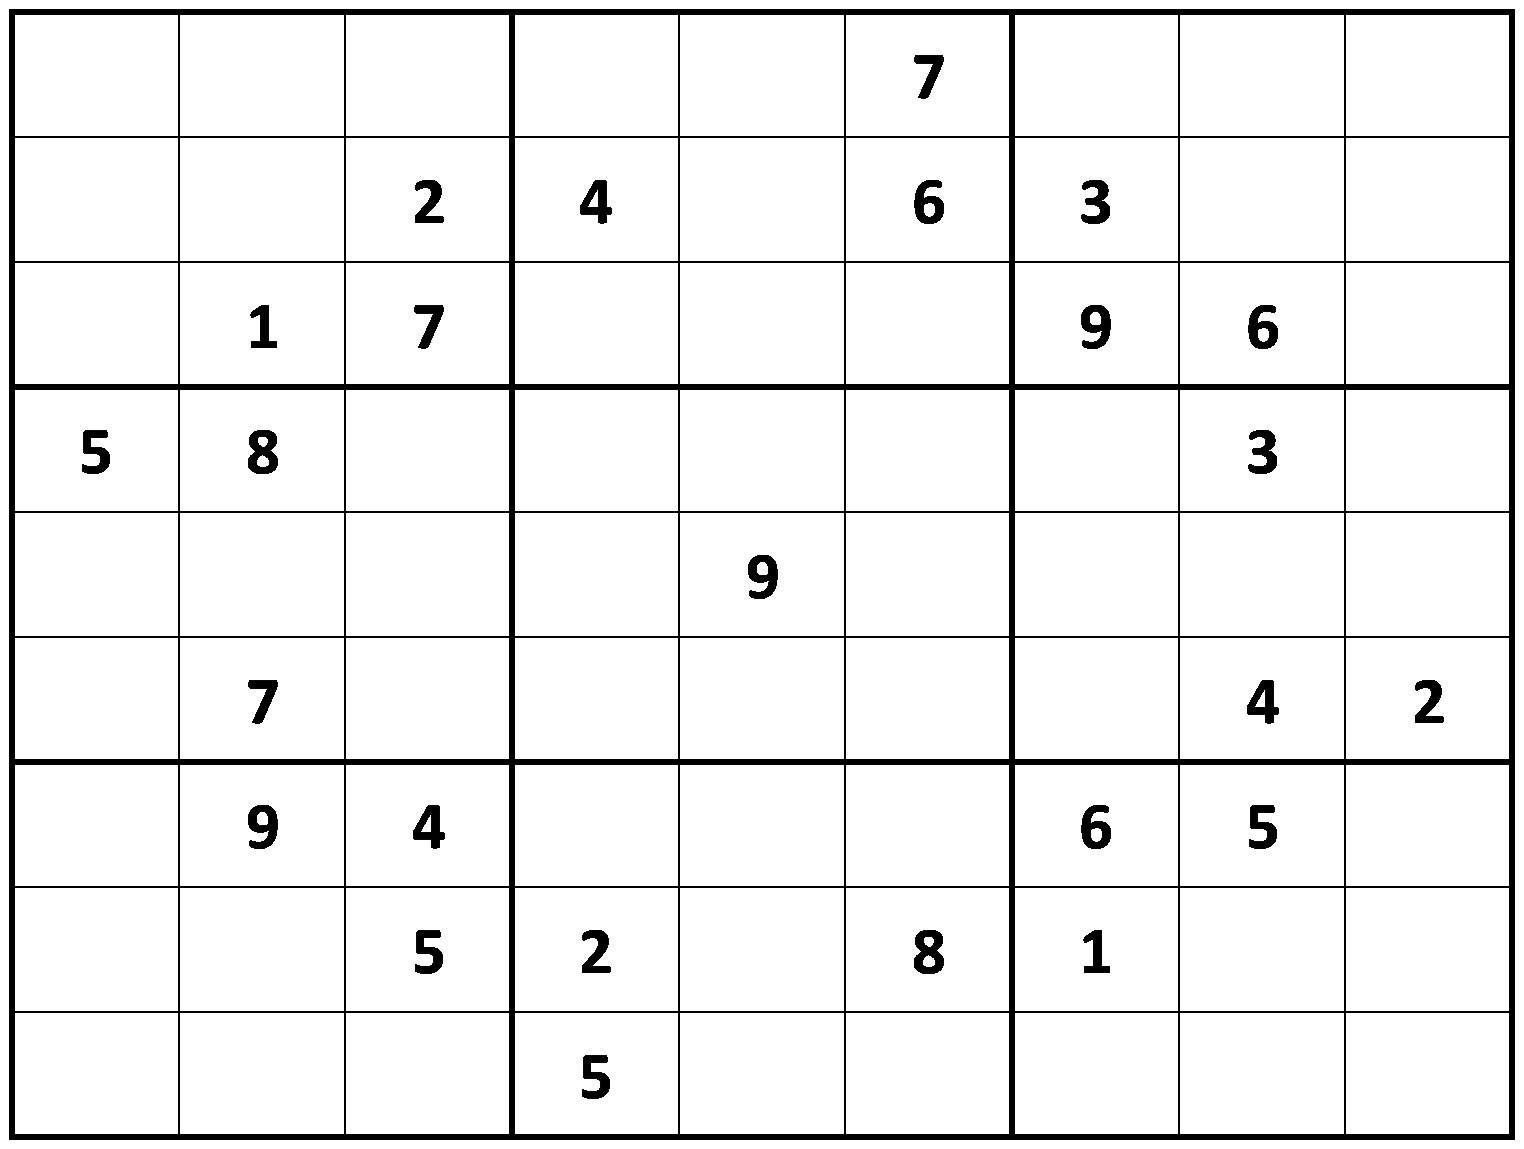 Free Printable Hard Sudoku Sheets